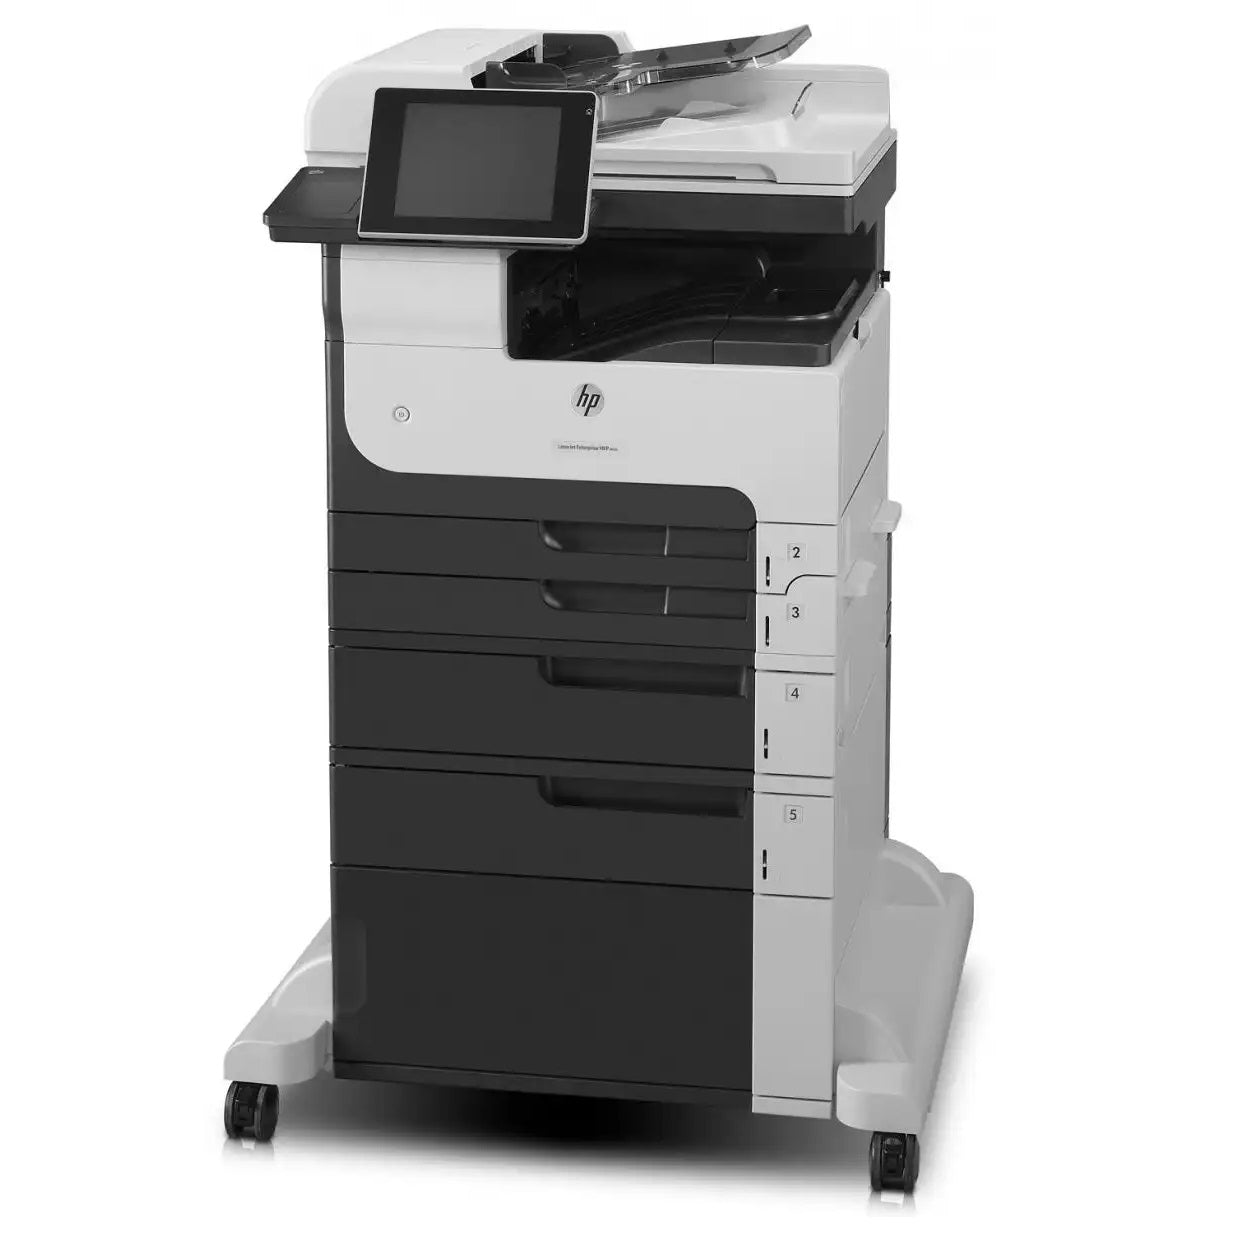 Absolute Toner $45/Month HP LaserJet Enterprise MFP M725f Monochrome Multifunction Laser Printer, Copier, Scanner 11x17 For Office Showroom Monochrome Copiers